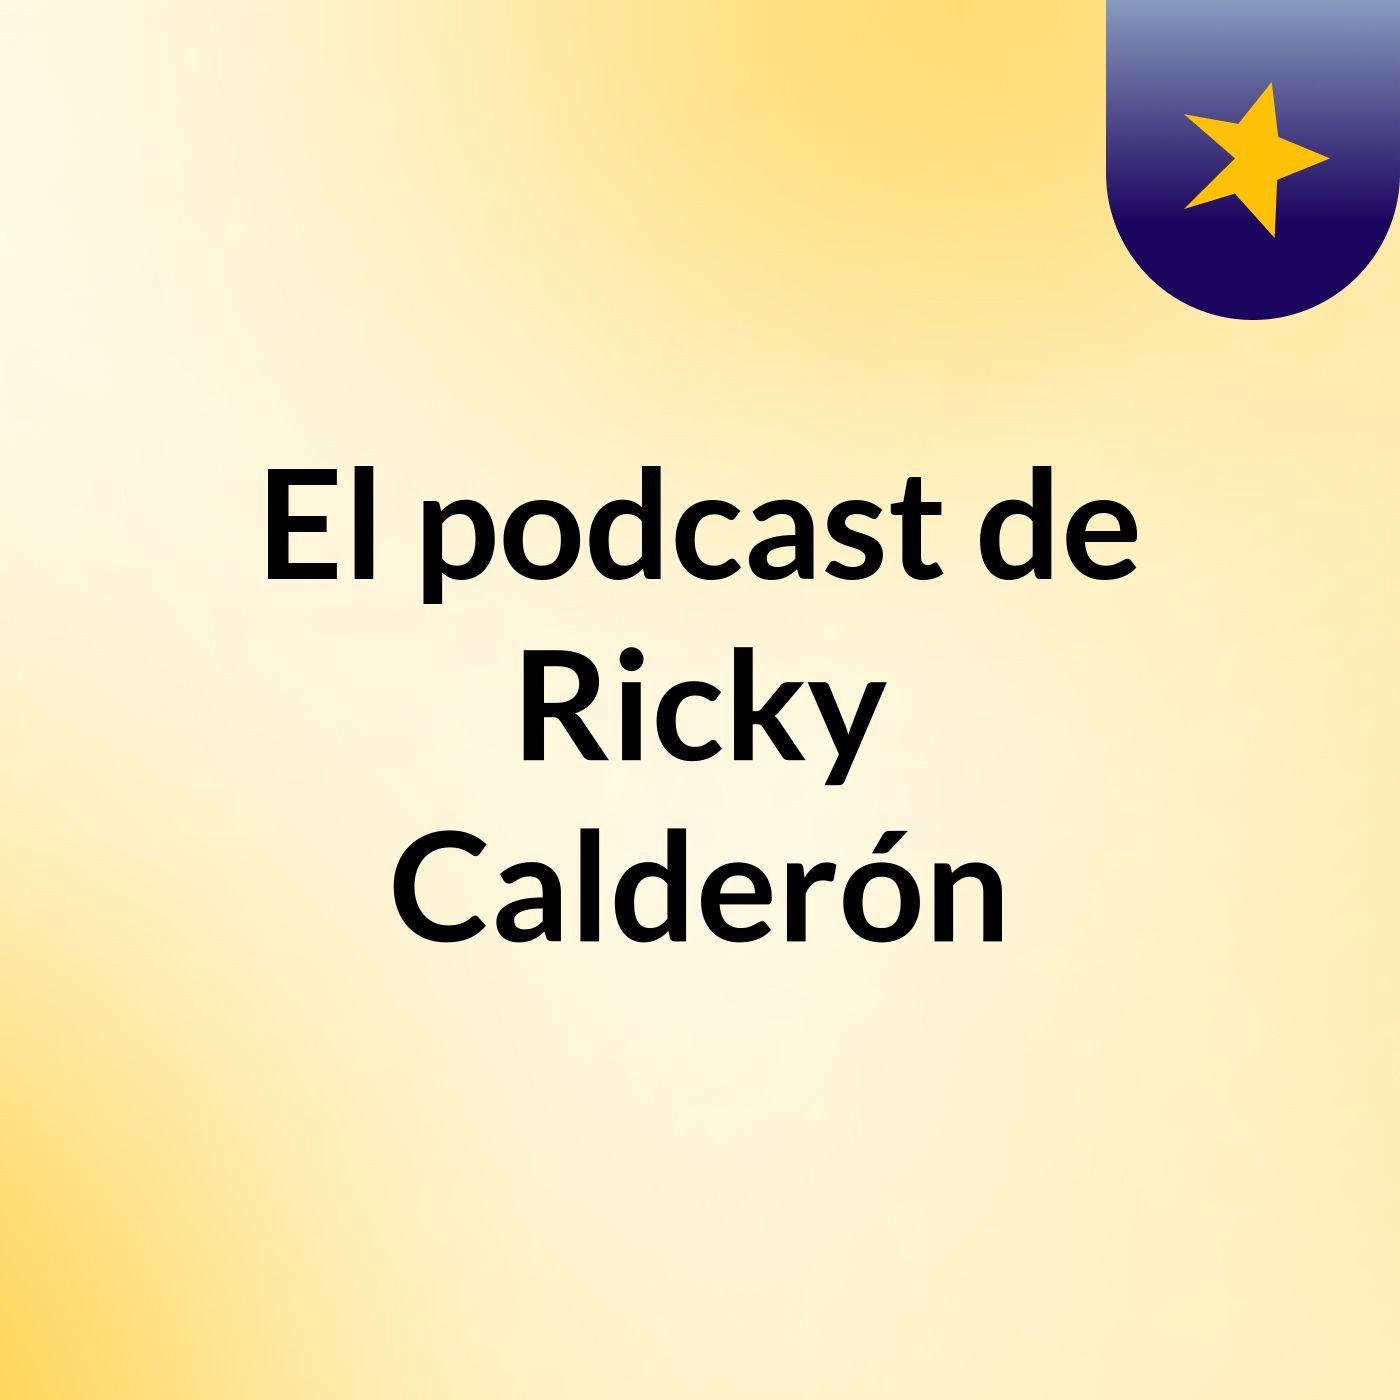 El podcast de Ricky Calderón